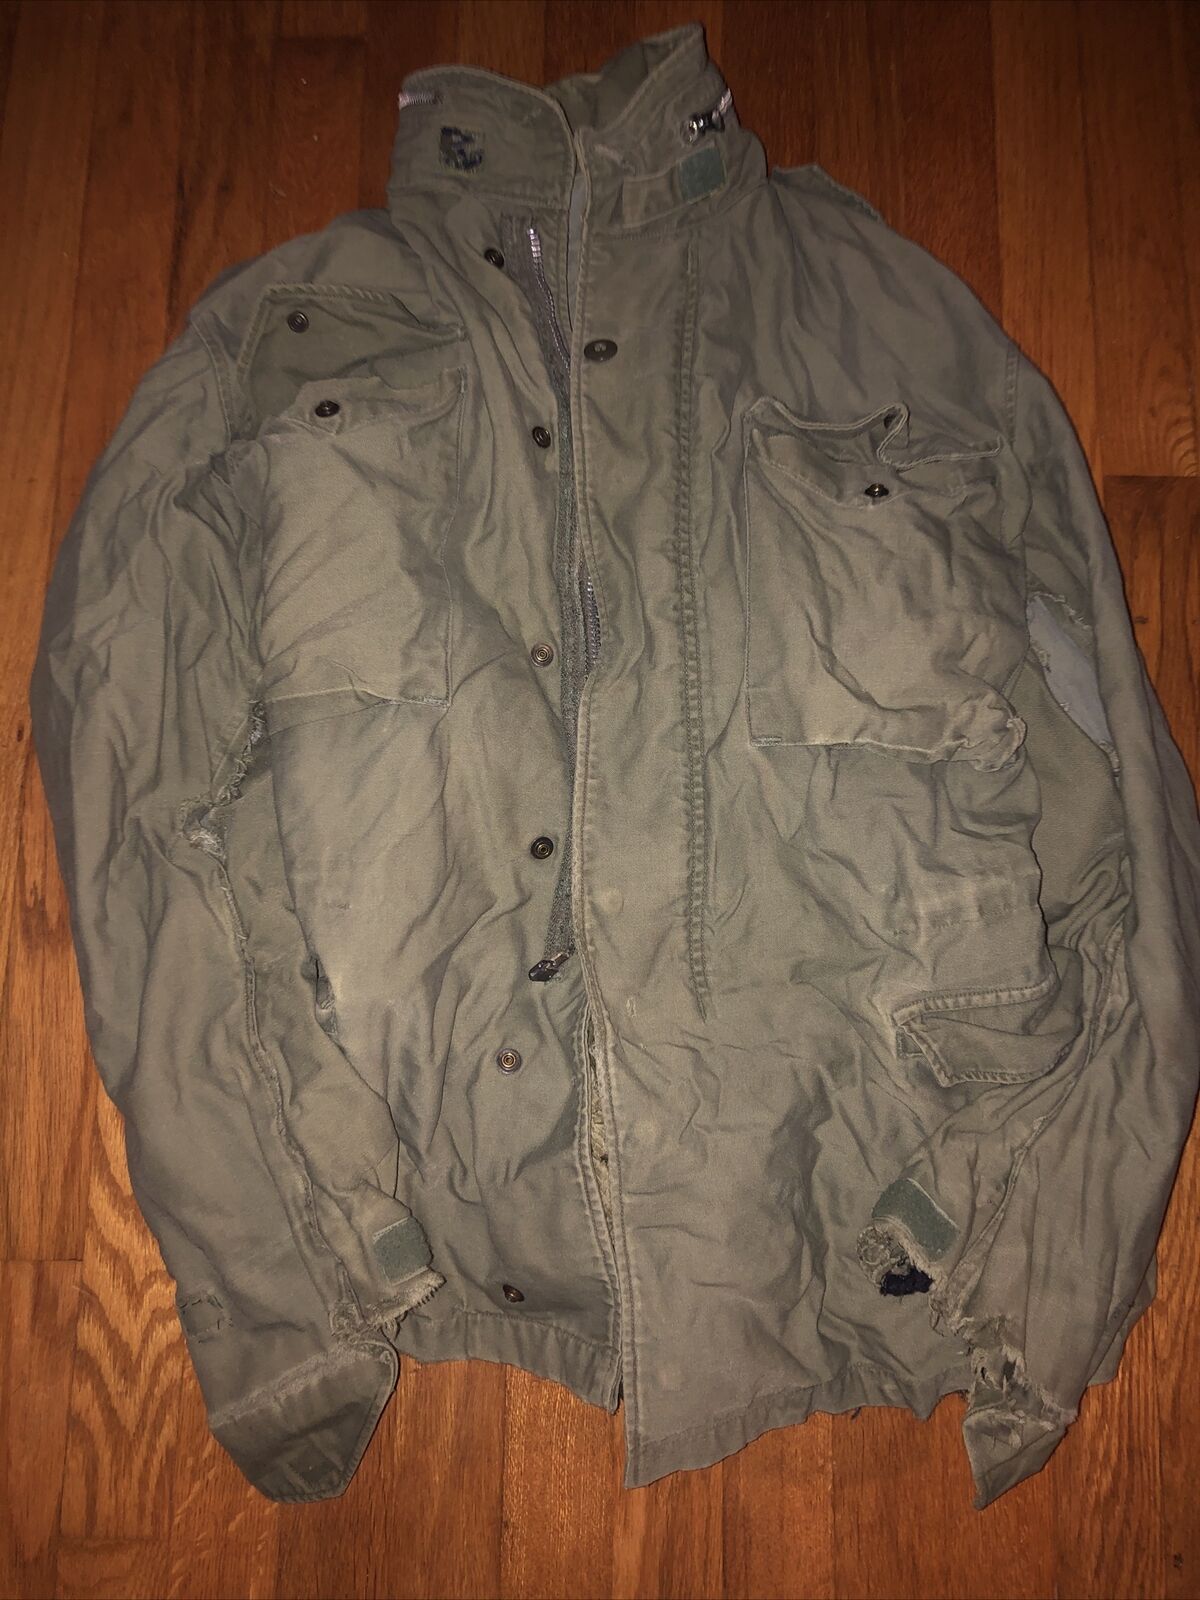 Vietnam Army Cold Weather Field Jacket Coat Medium? 2890 Rough Shape